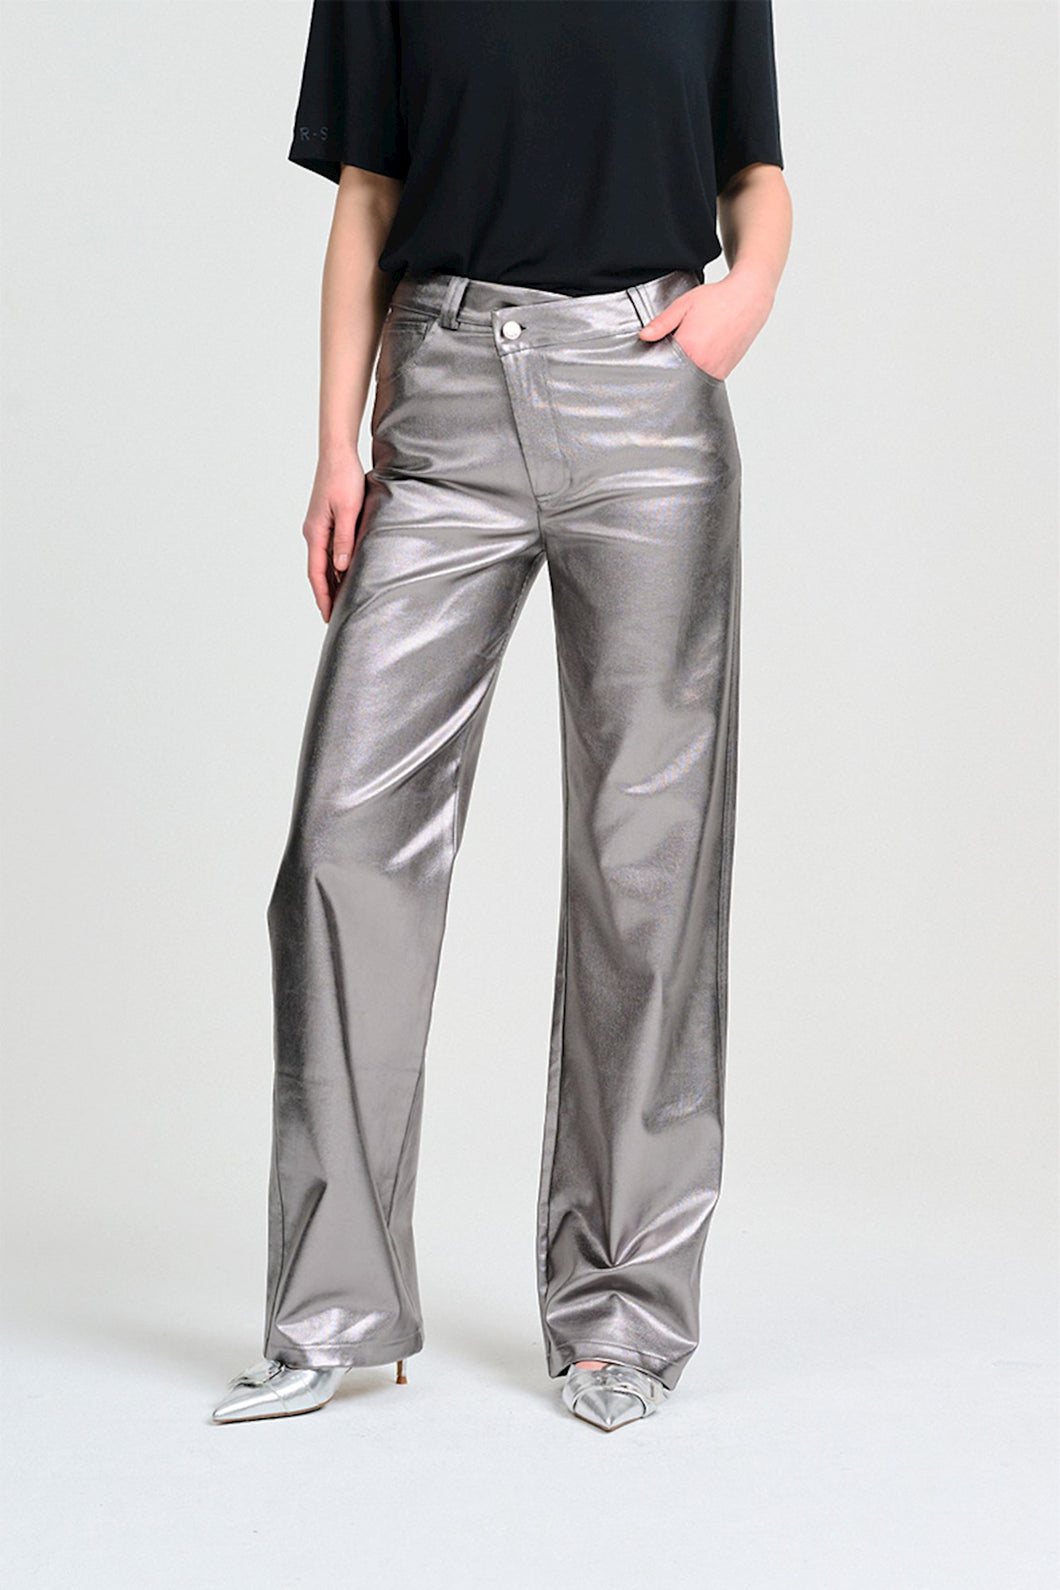 CHPTR-S Hazy Pants High Rise Wide Fit Graphite Metallic